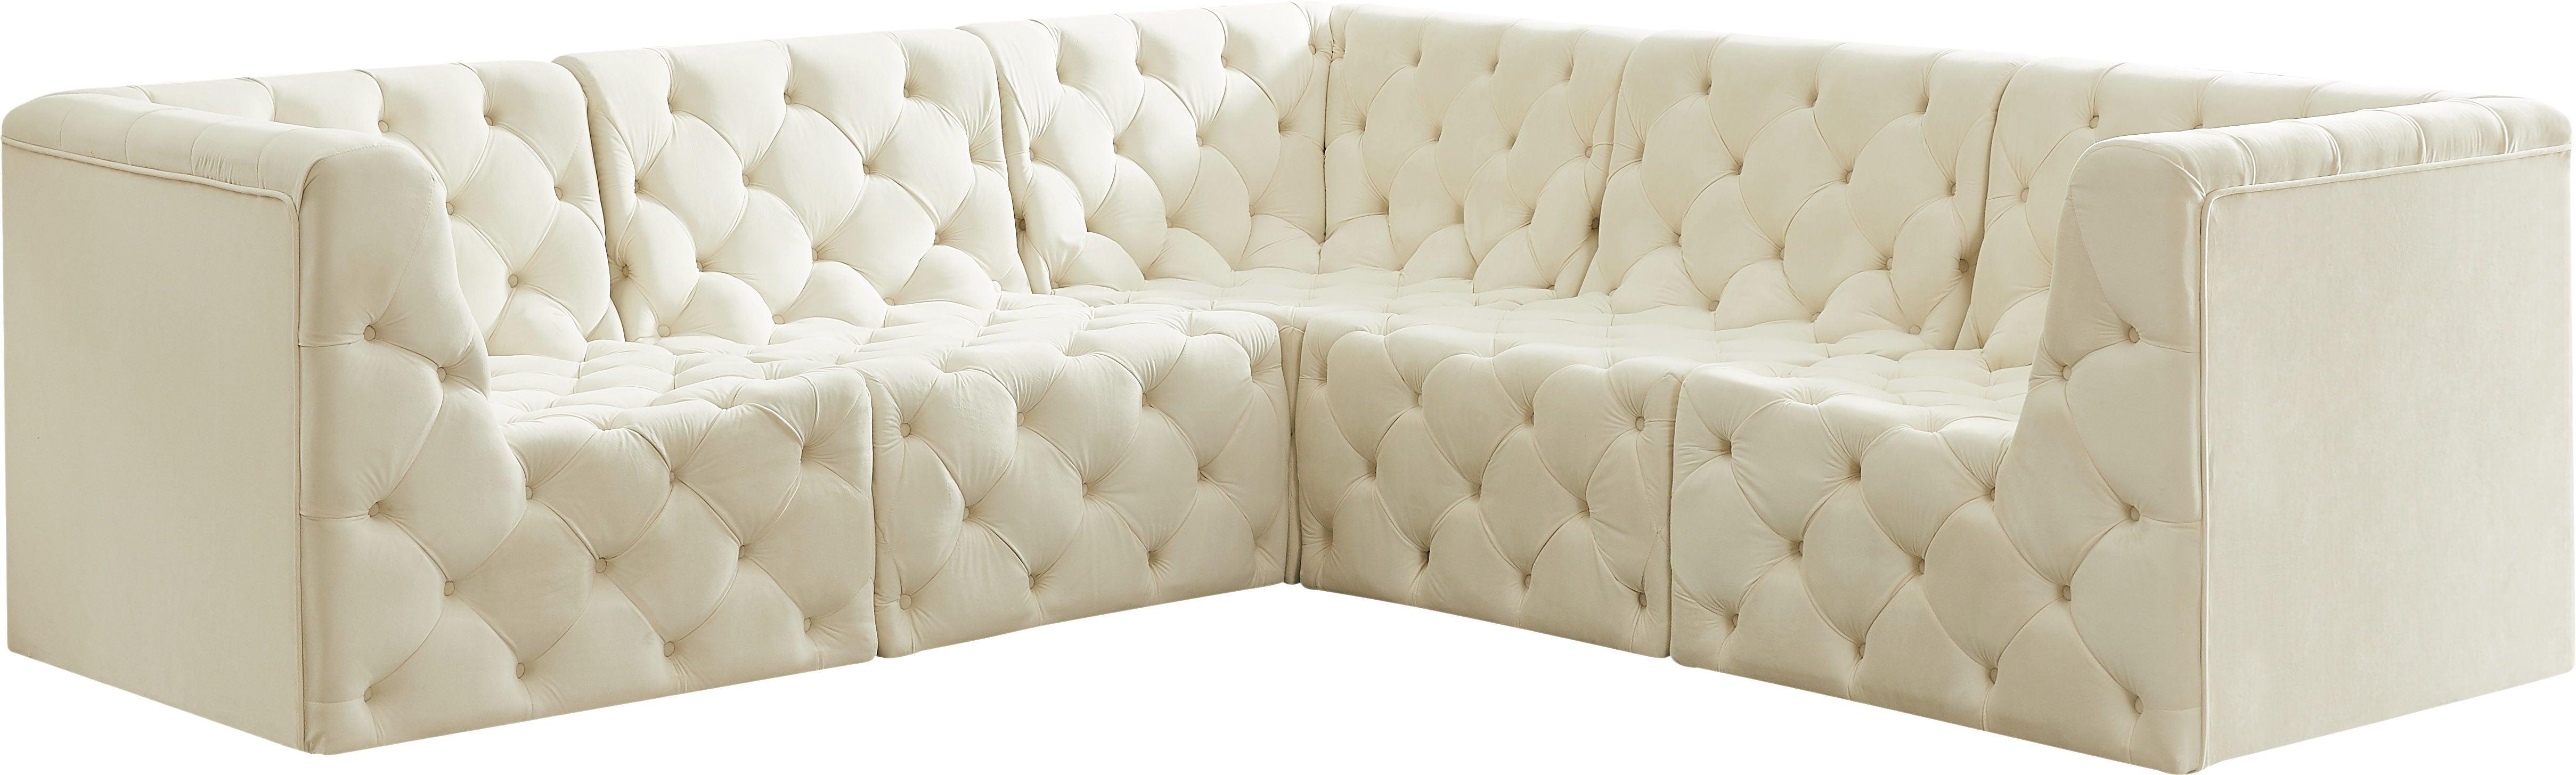 Meridian Furniture - Tuft - Modular Sectional 5 Piece - Cream - 5th Avenue Furniture